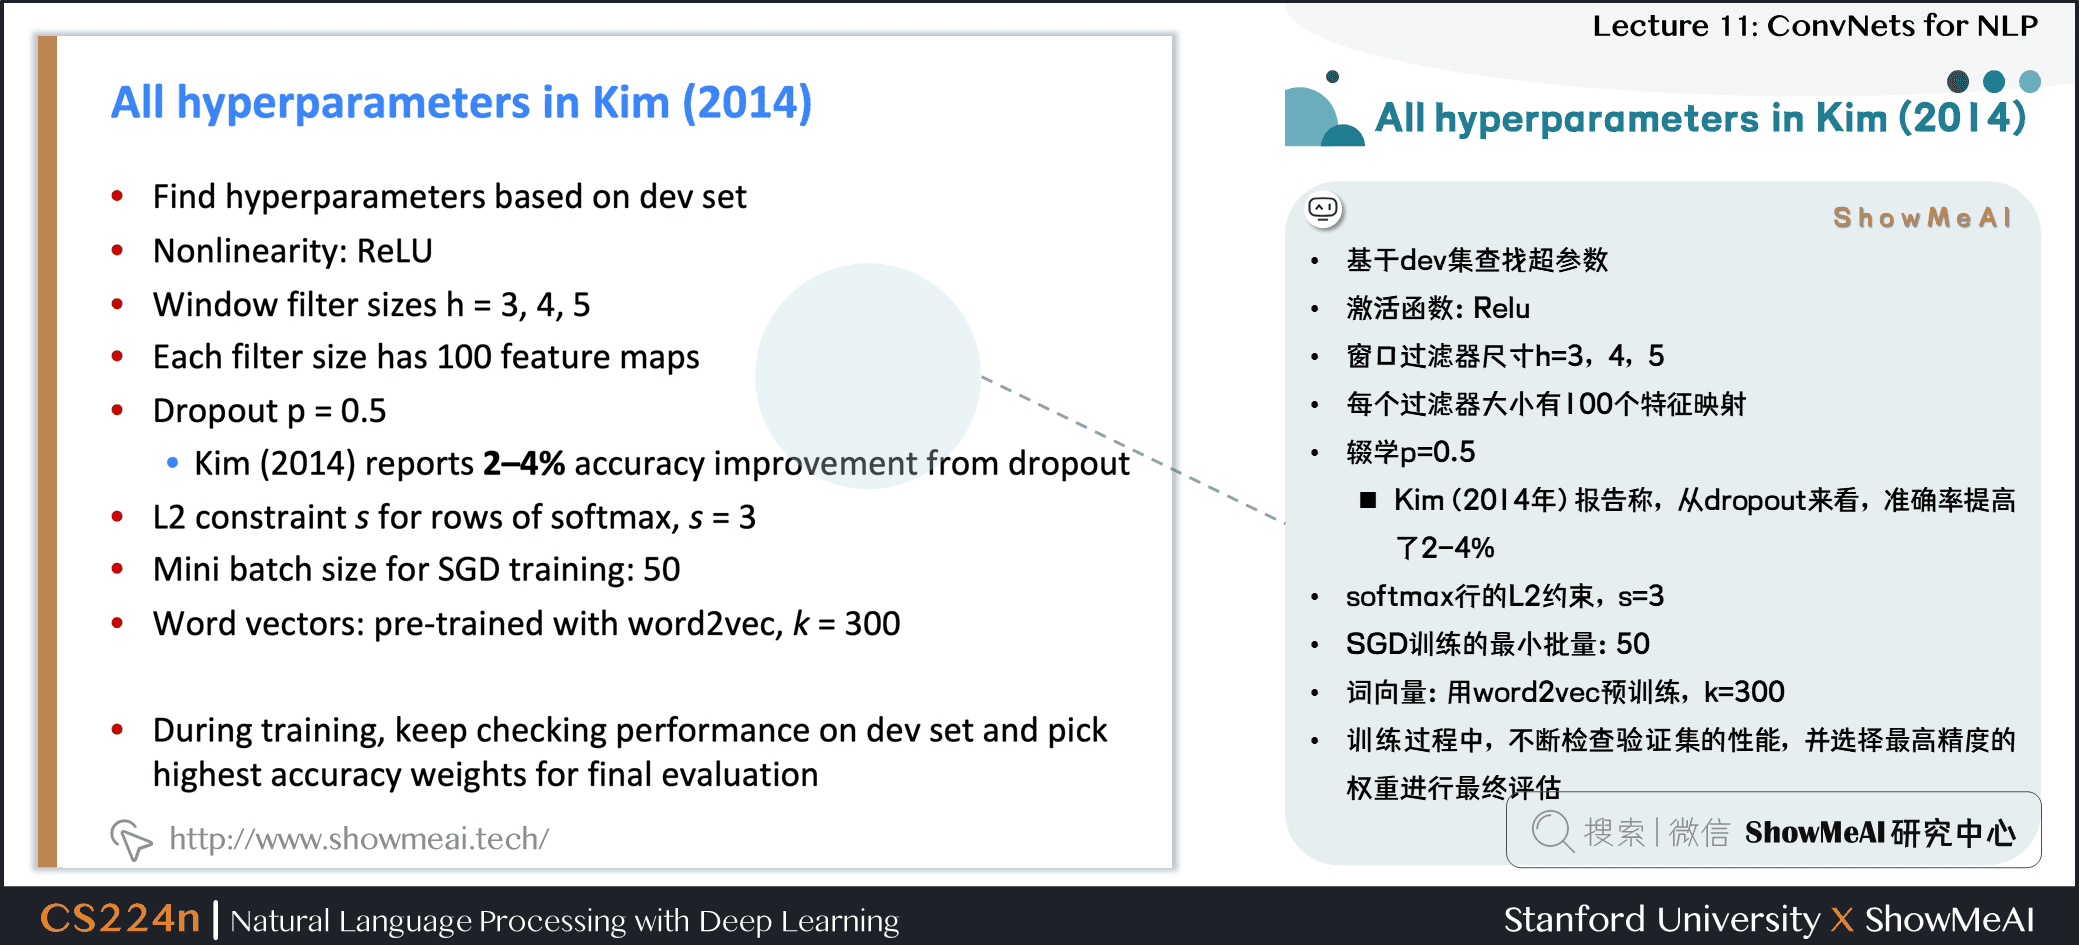 All hyperparameters in Kim (2014)